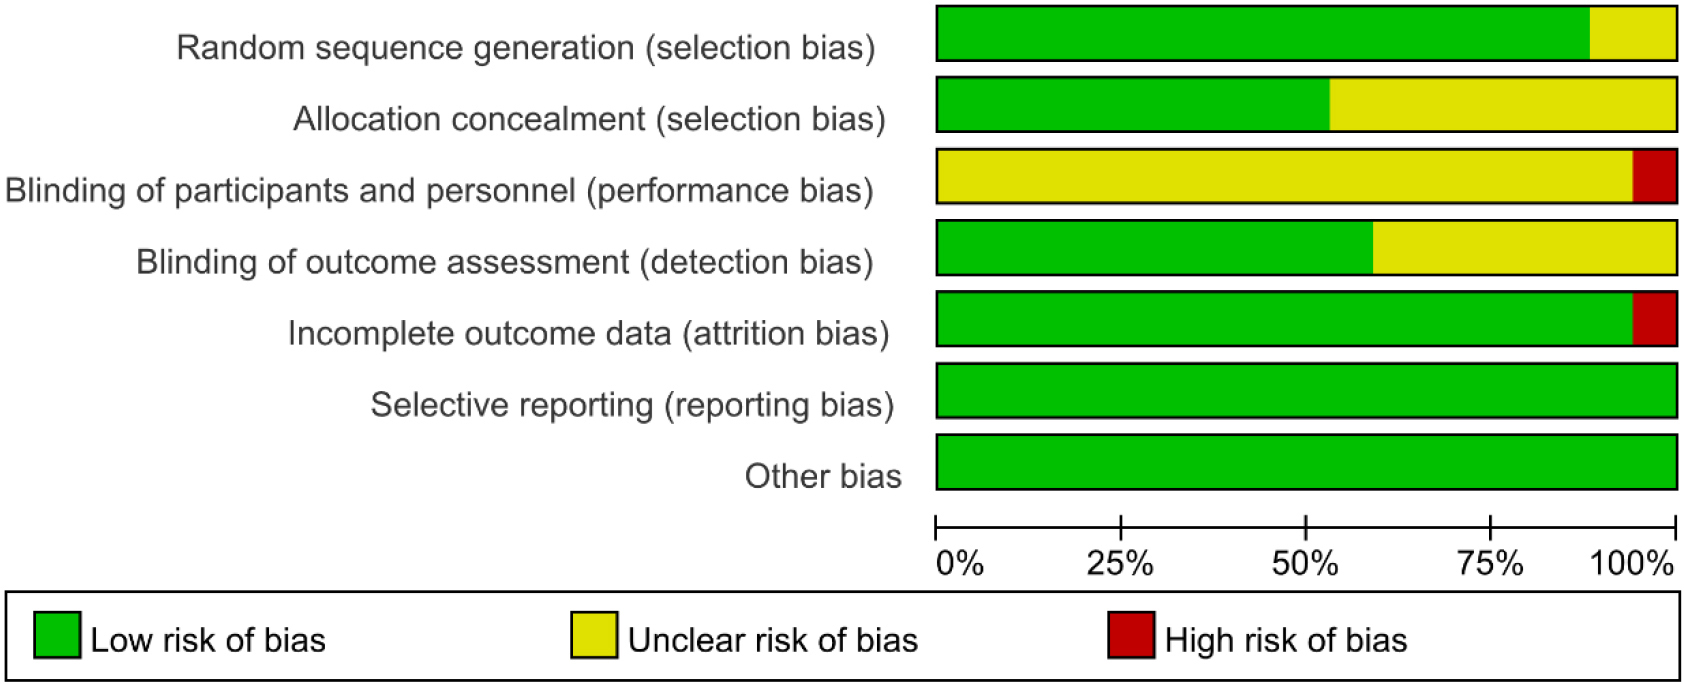 Risk of bias summary.